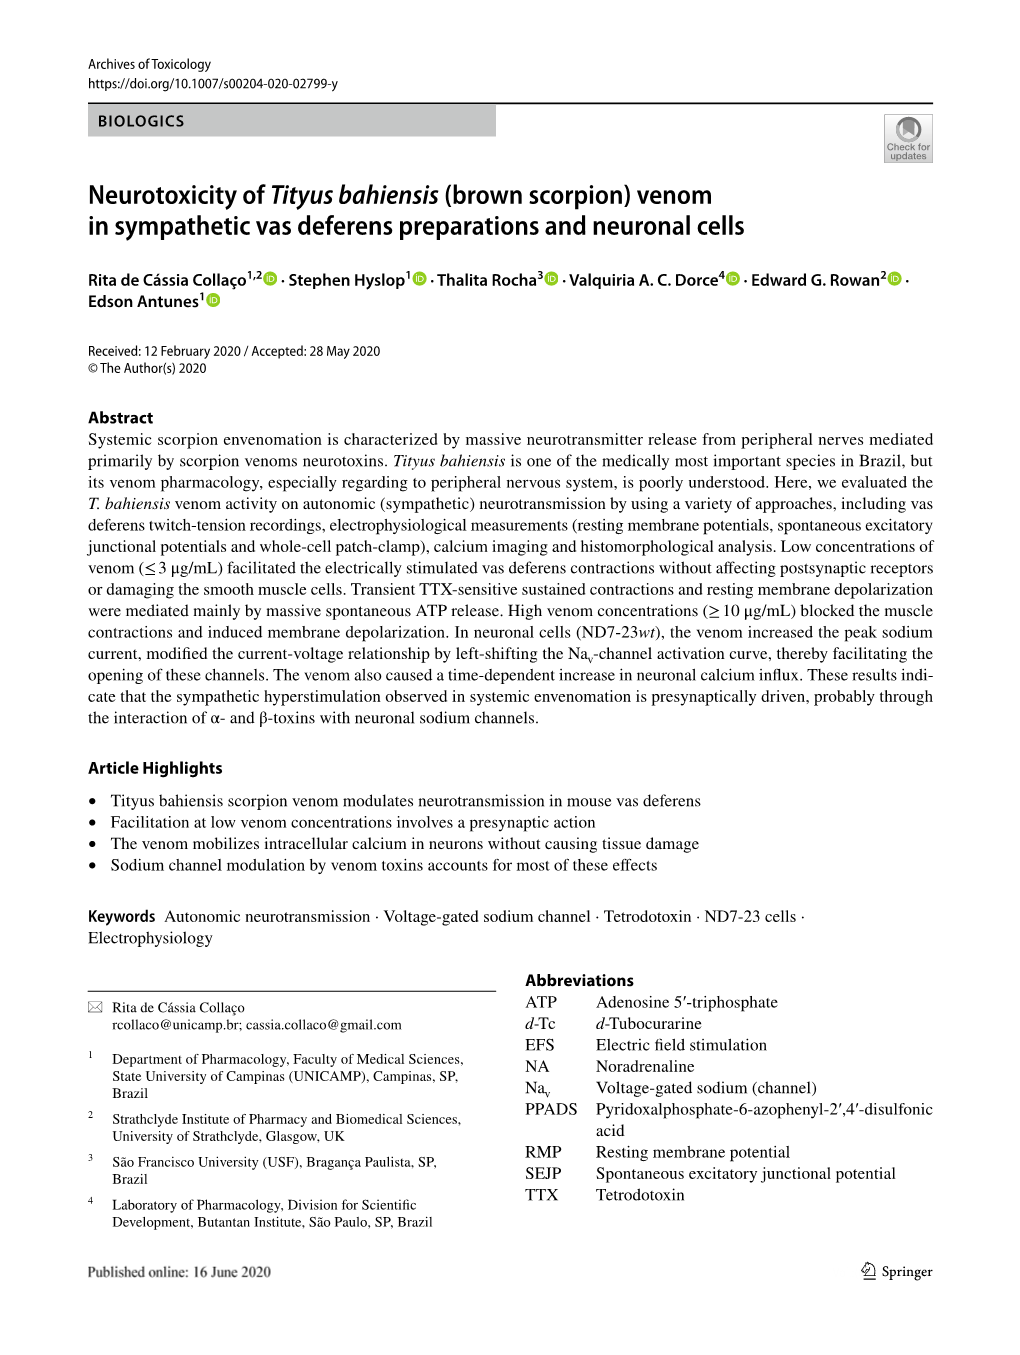 Neurotoxicity of Tityus Bahiensis (Brown Scorpion) Venom in Sympathetic Vas Deferens Preparations and Neuronal Cells